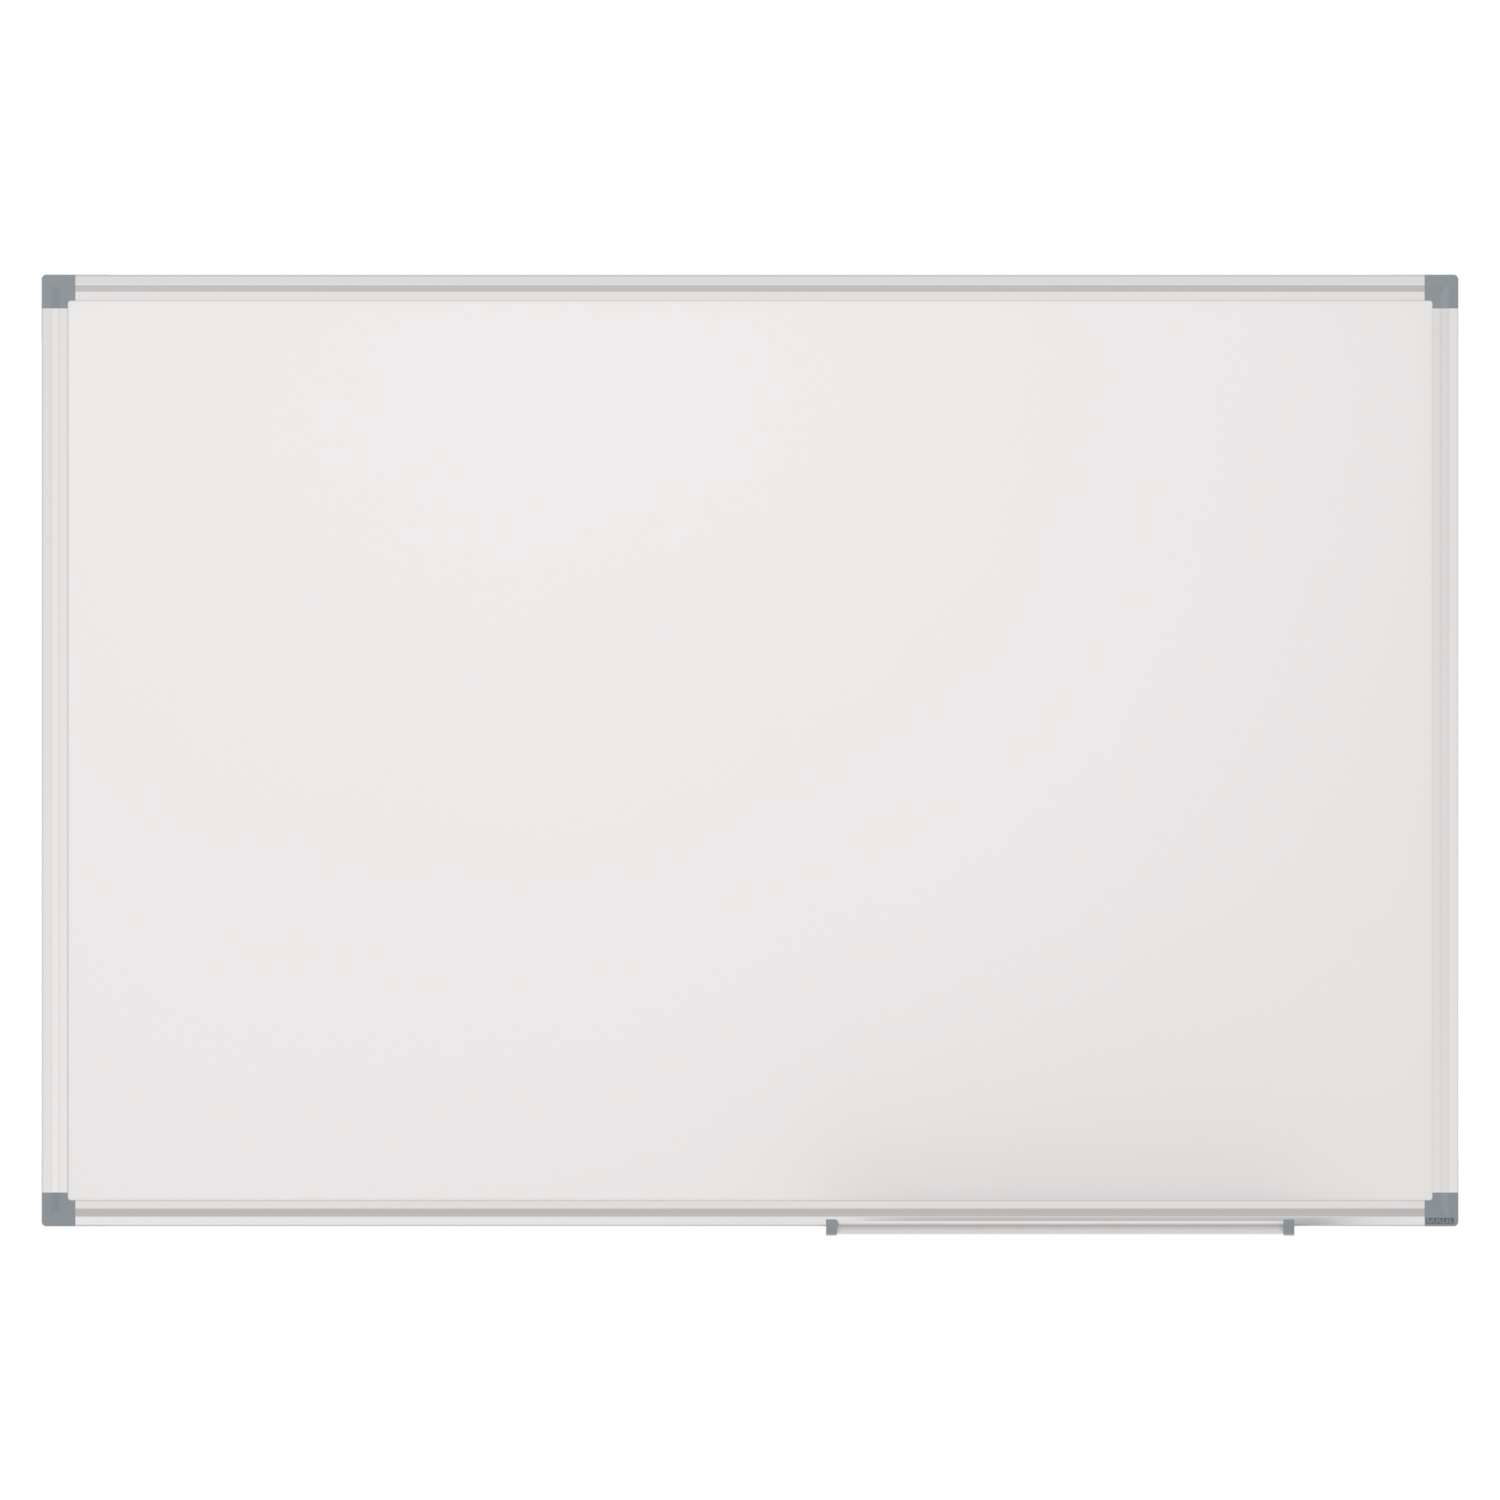 Whiteboard MAULstandard, 45x60 cm